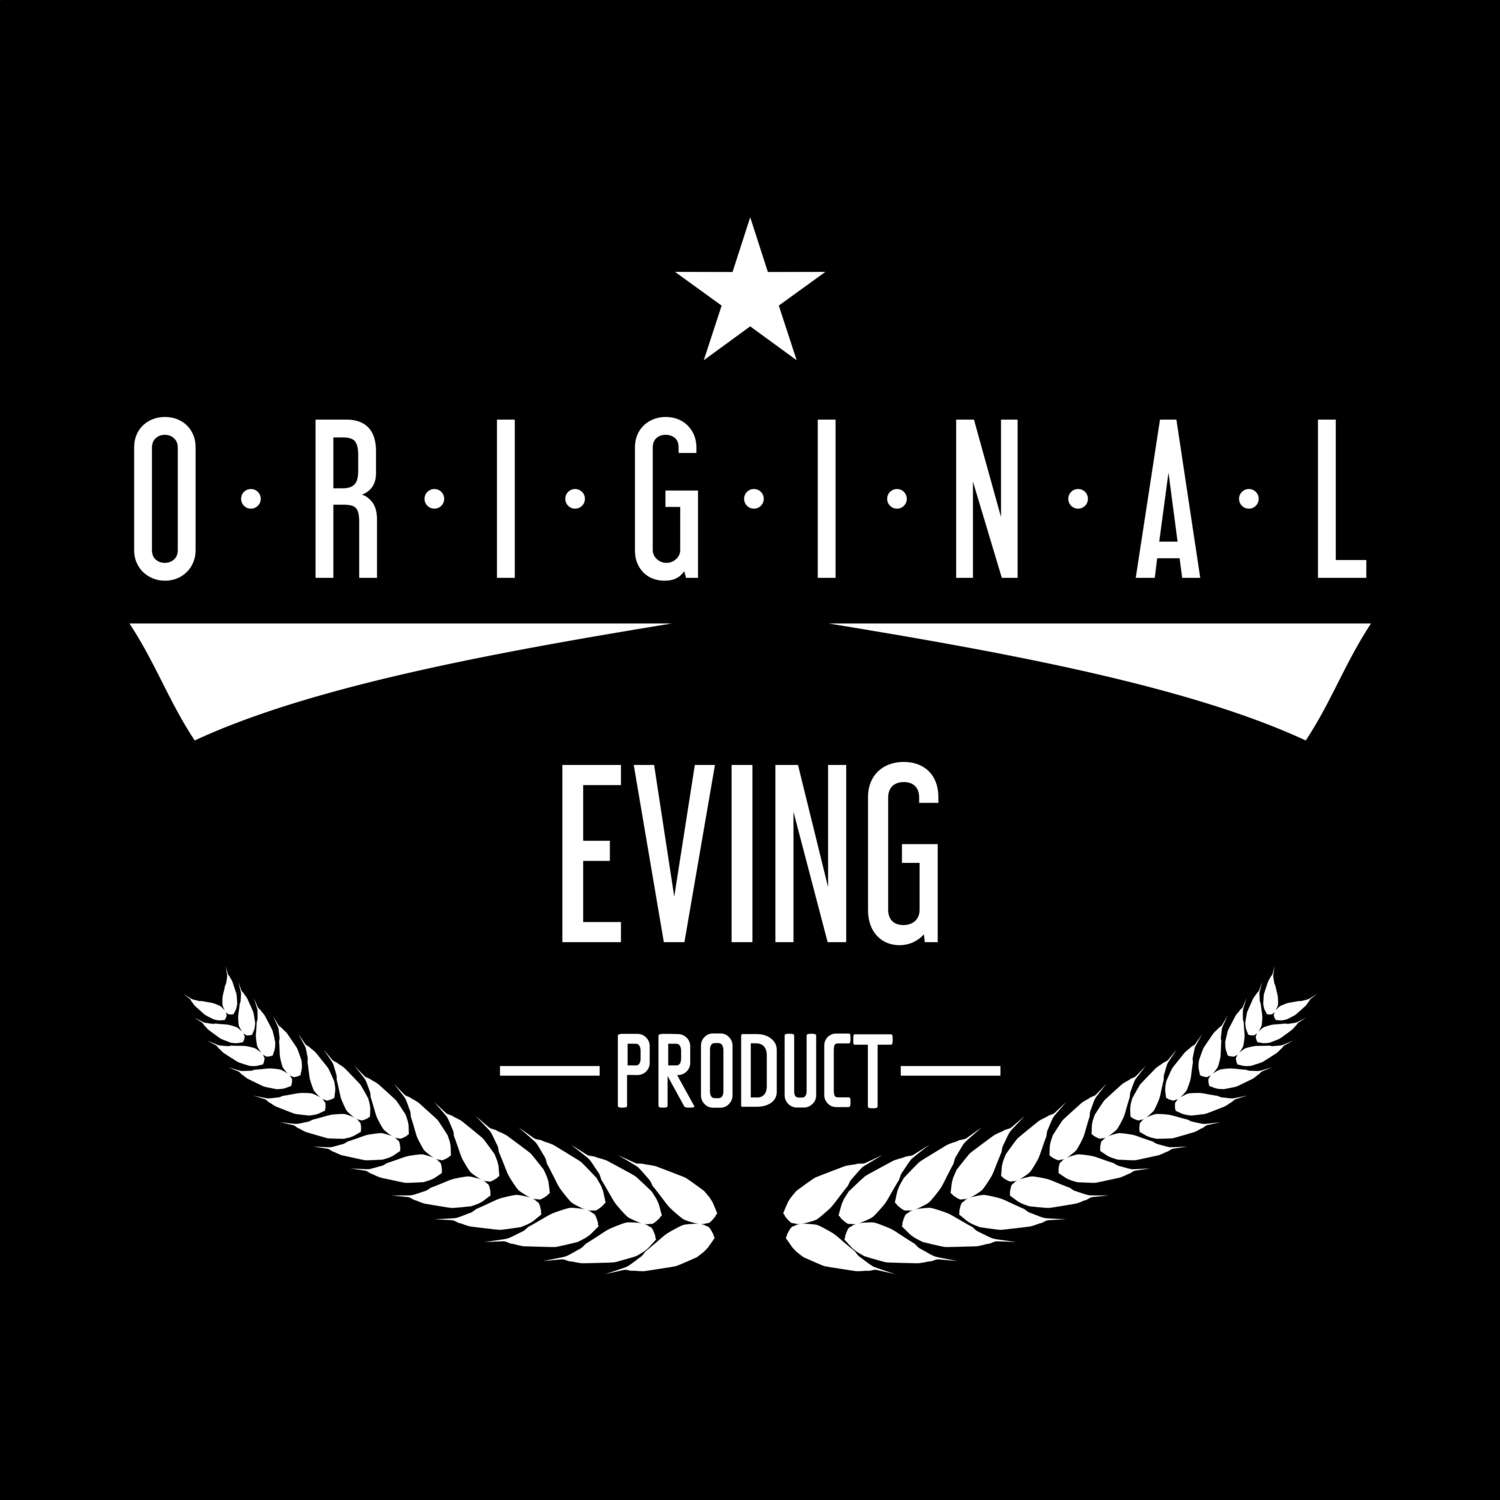 Eving T-Shirt »Original Product«